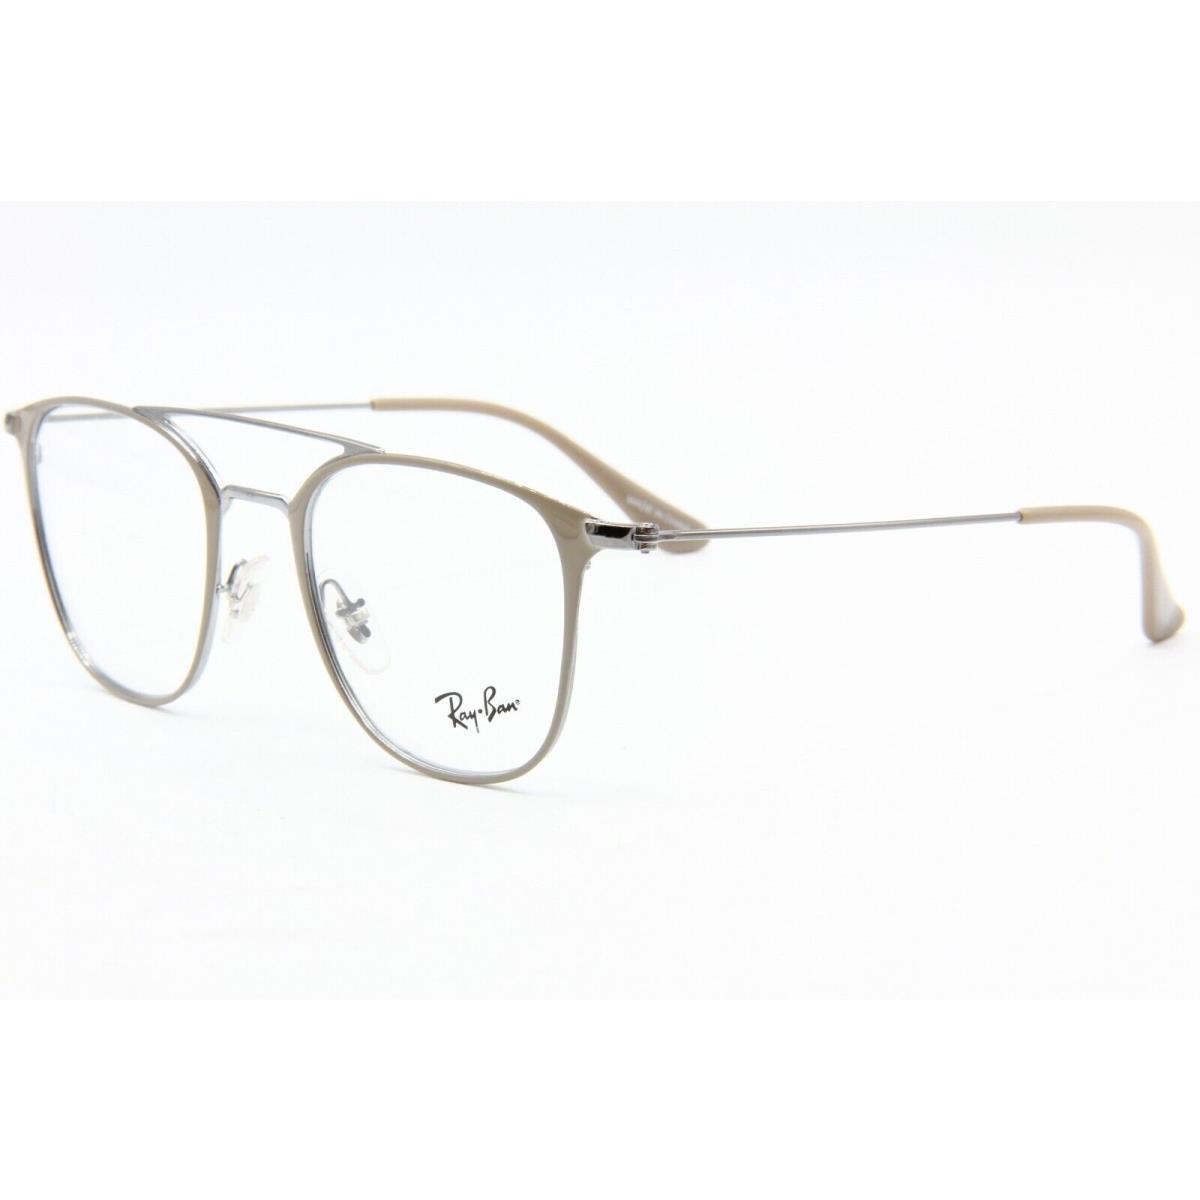 Ray-ban Ray Ban RB 6377 2909 Beige Eyeglasses Frame RB 6377 RX 48-21